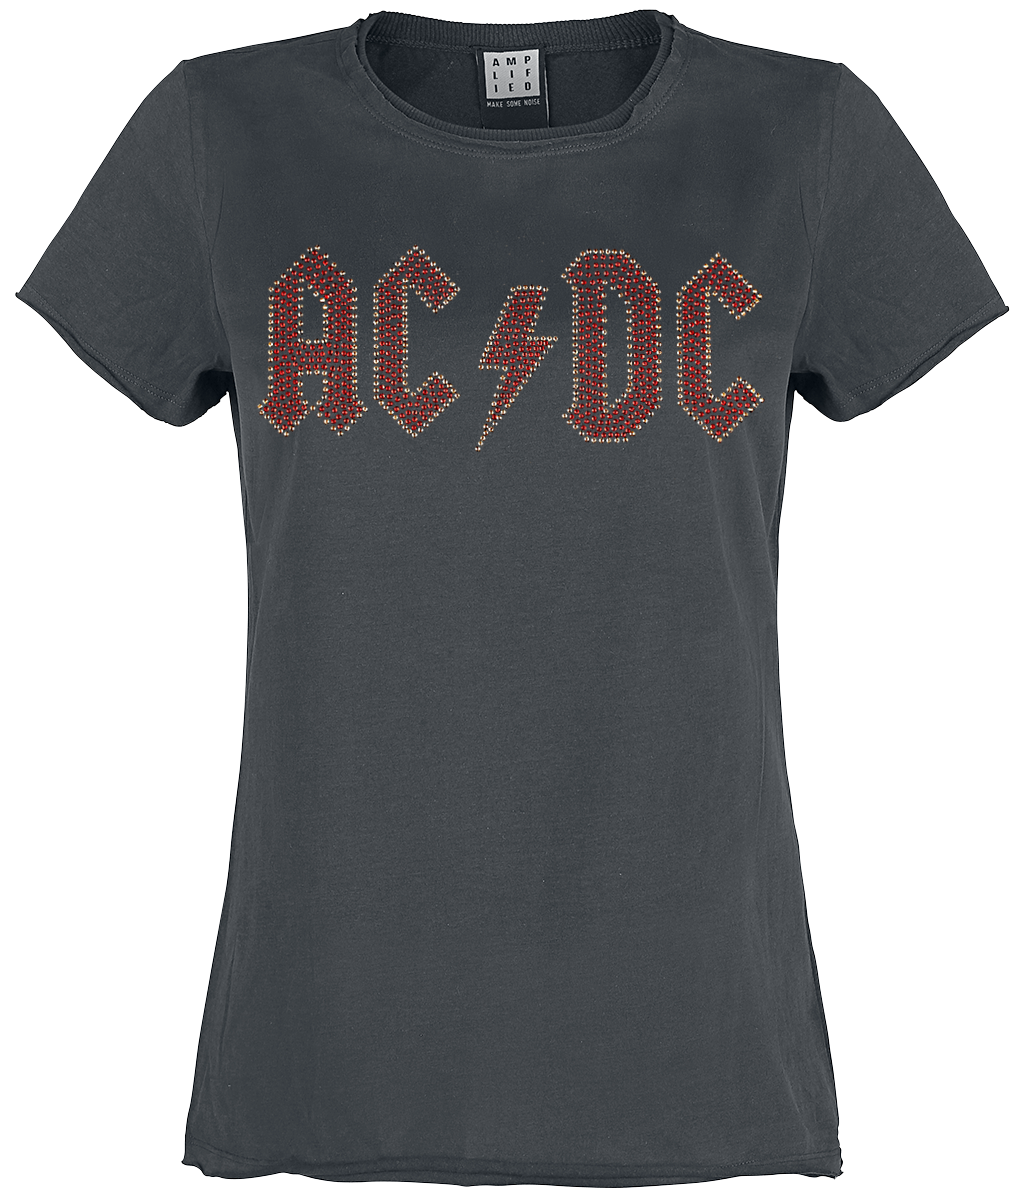 AC/DC - Amplified Collection - Logo Diamante - Girls shirt - charcoal image